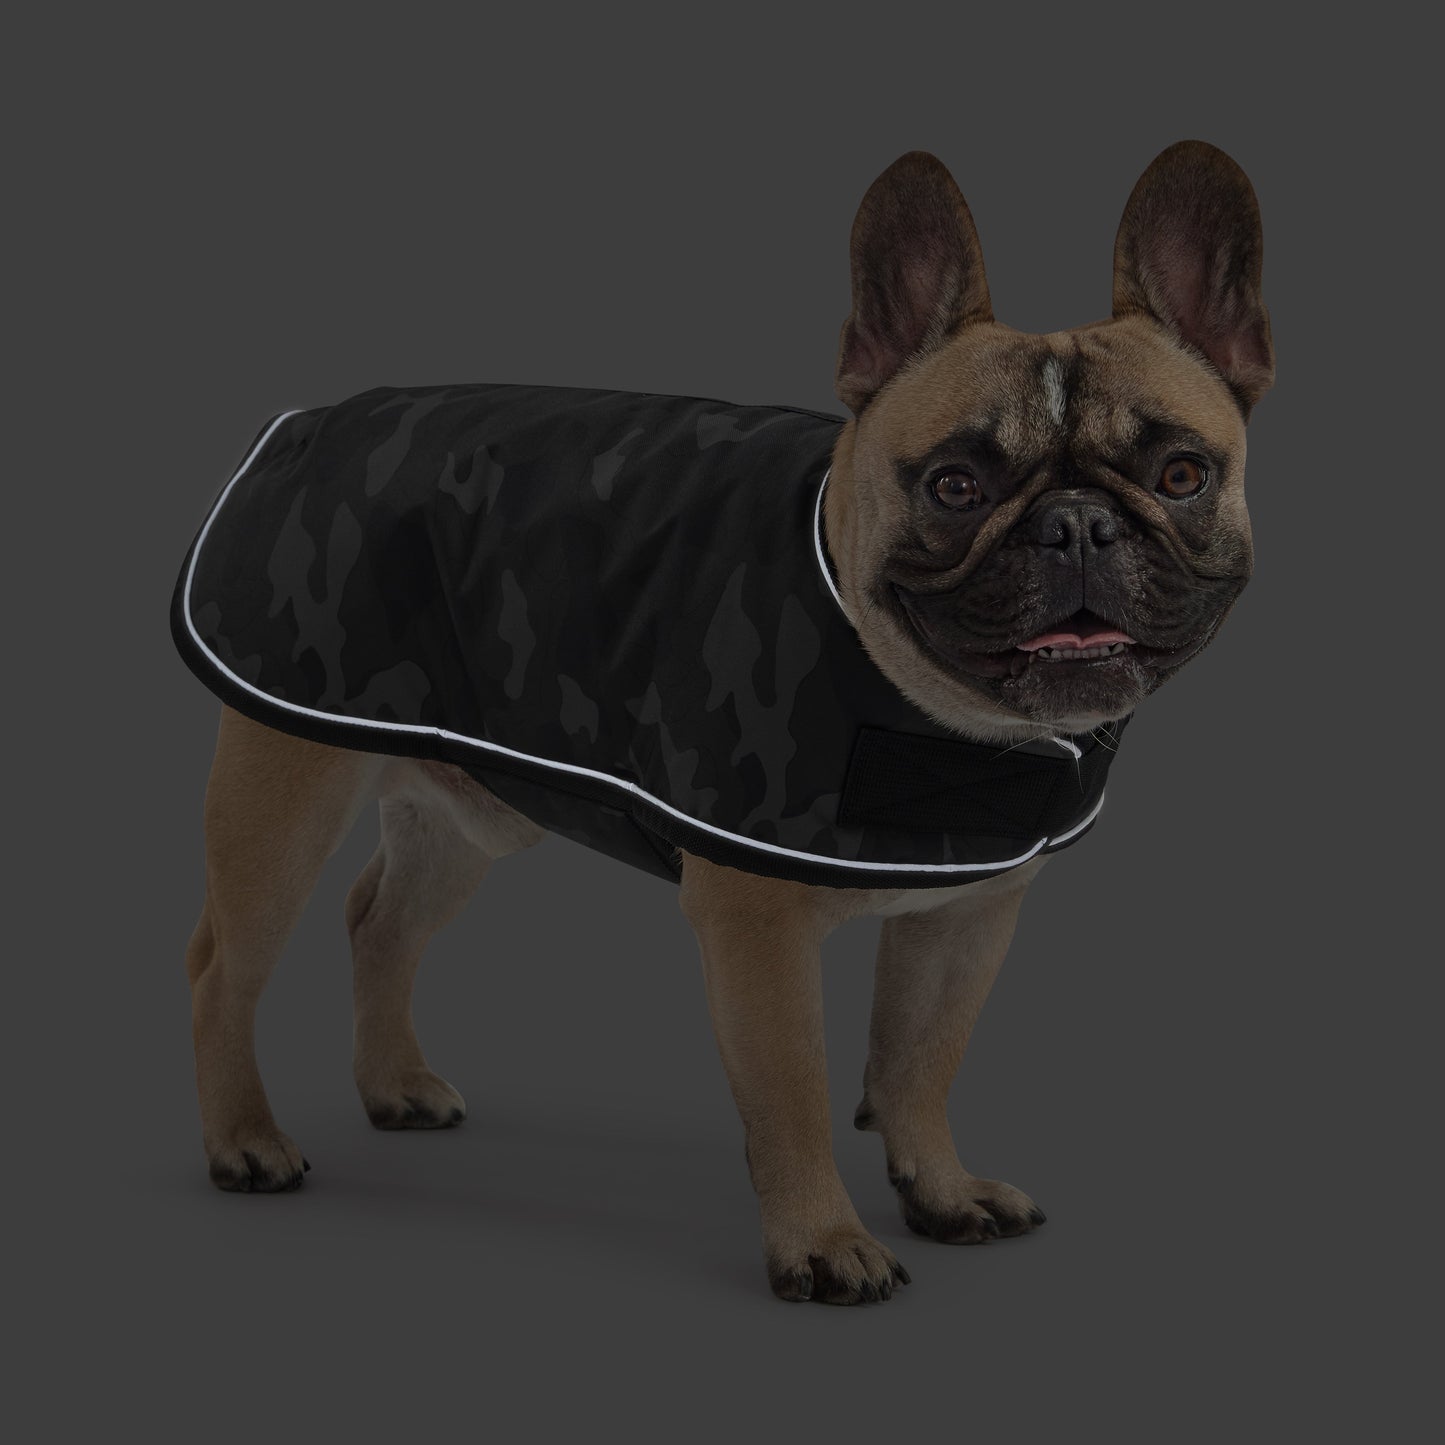 Blanket Jacket - Camo by GF Pet